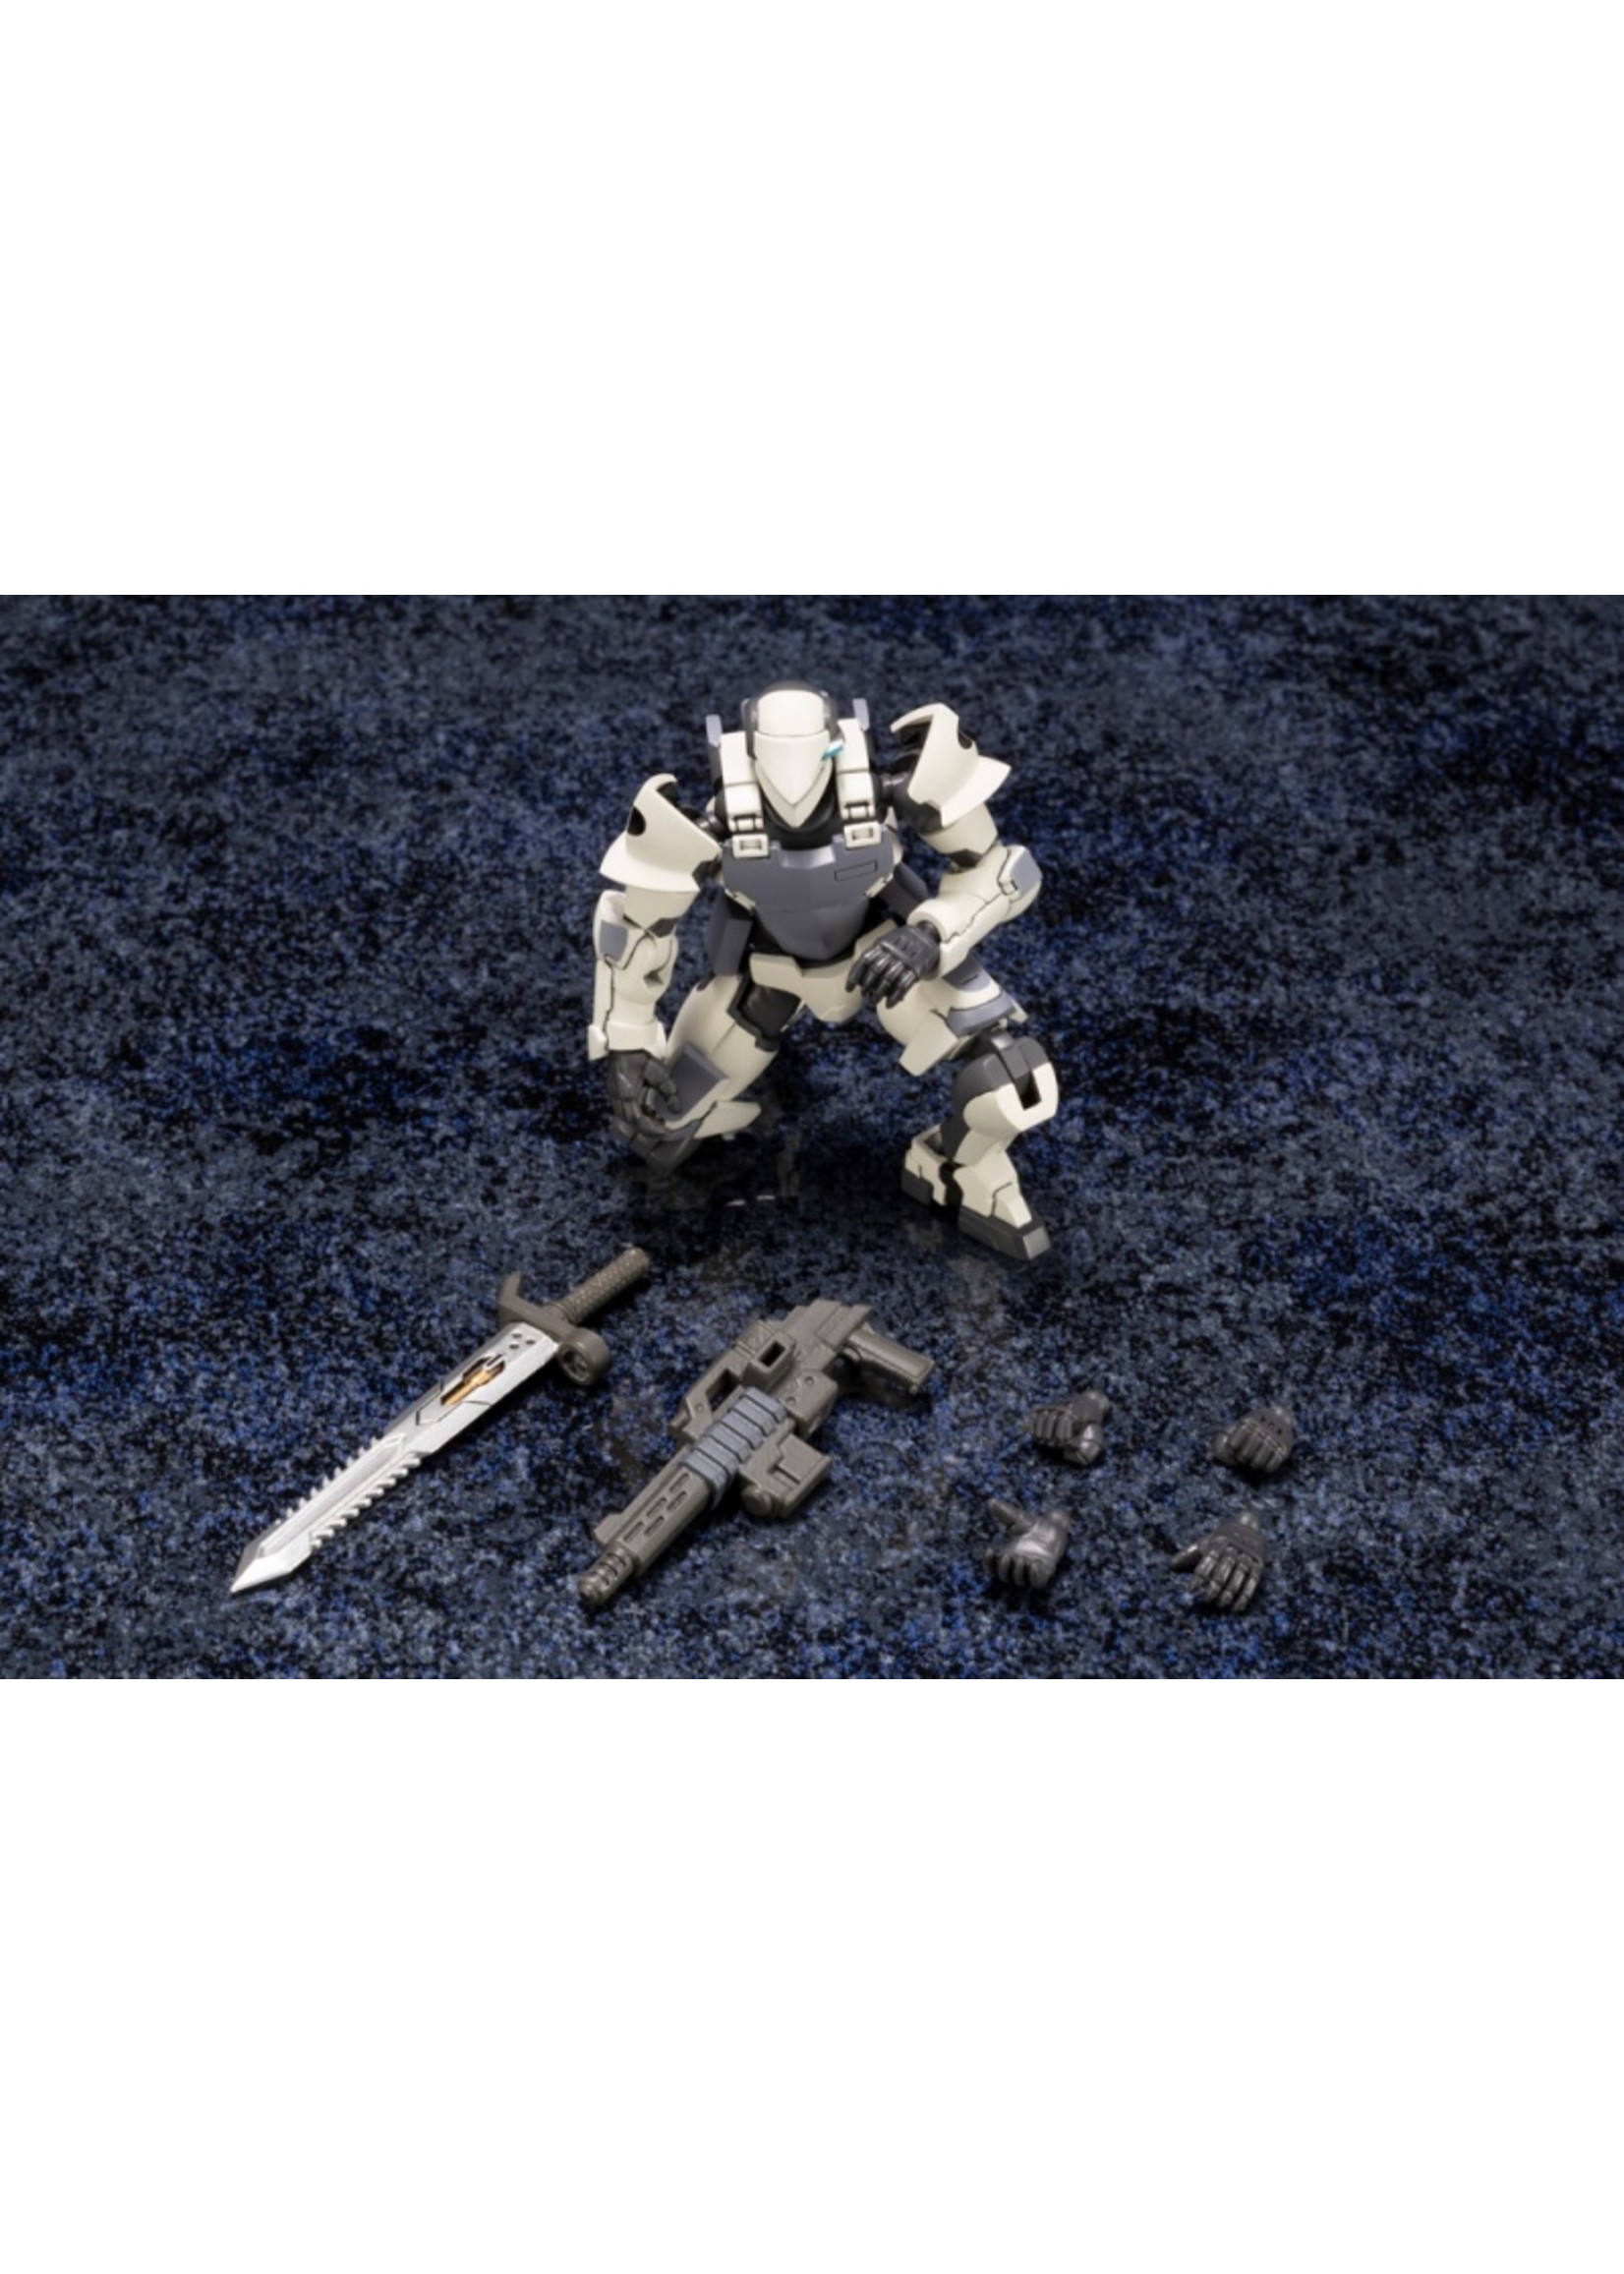 Kotobukiya HG049 - "Hexa Gear" Governor Armor Type: Pawn A1 (Ver.1.5)